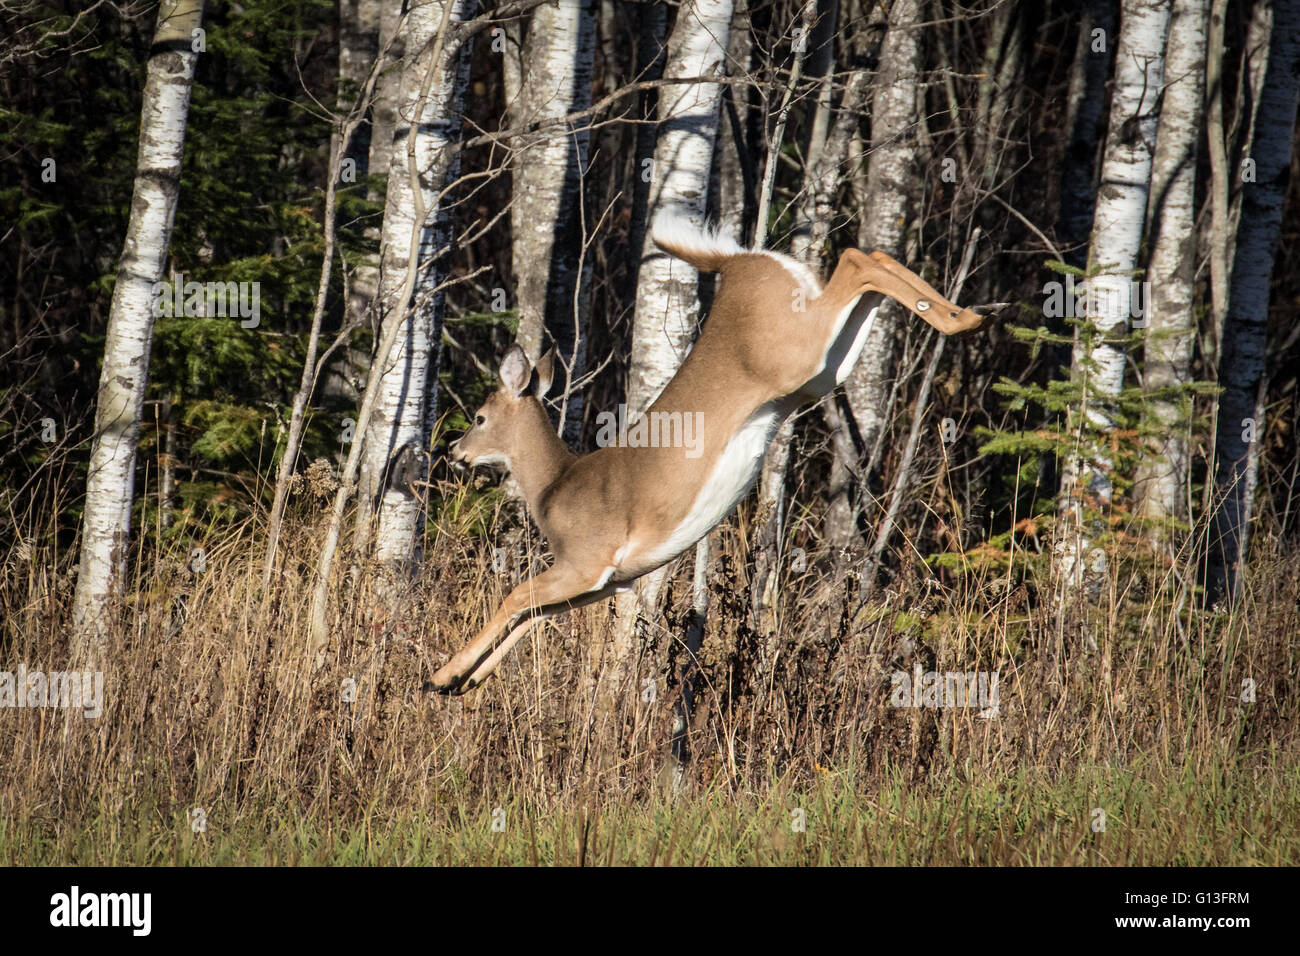 Una coda bianca limiti di cervi nei boschi nel Parco nazionale Voyageurs, Minnesota, Stati Uniti d'America Foto Stock